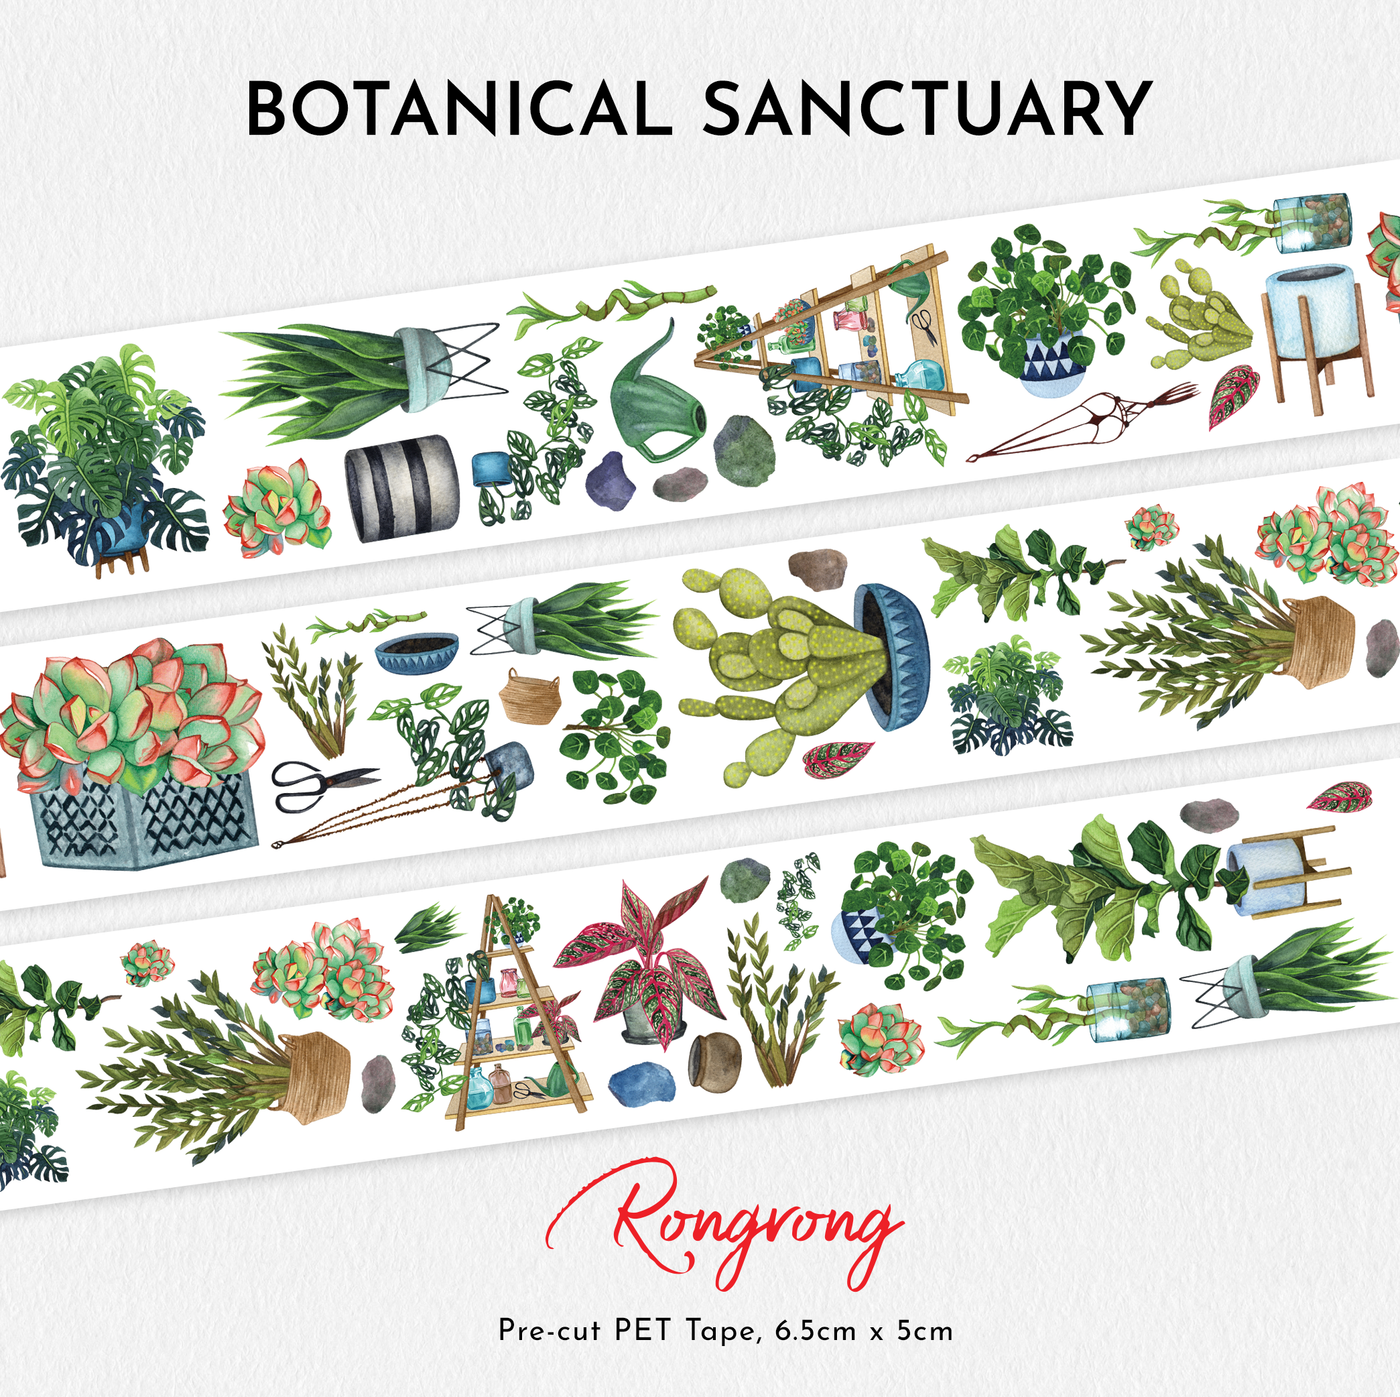 Rongrong Botanical Sanctuary PET Tape